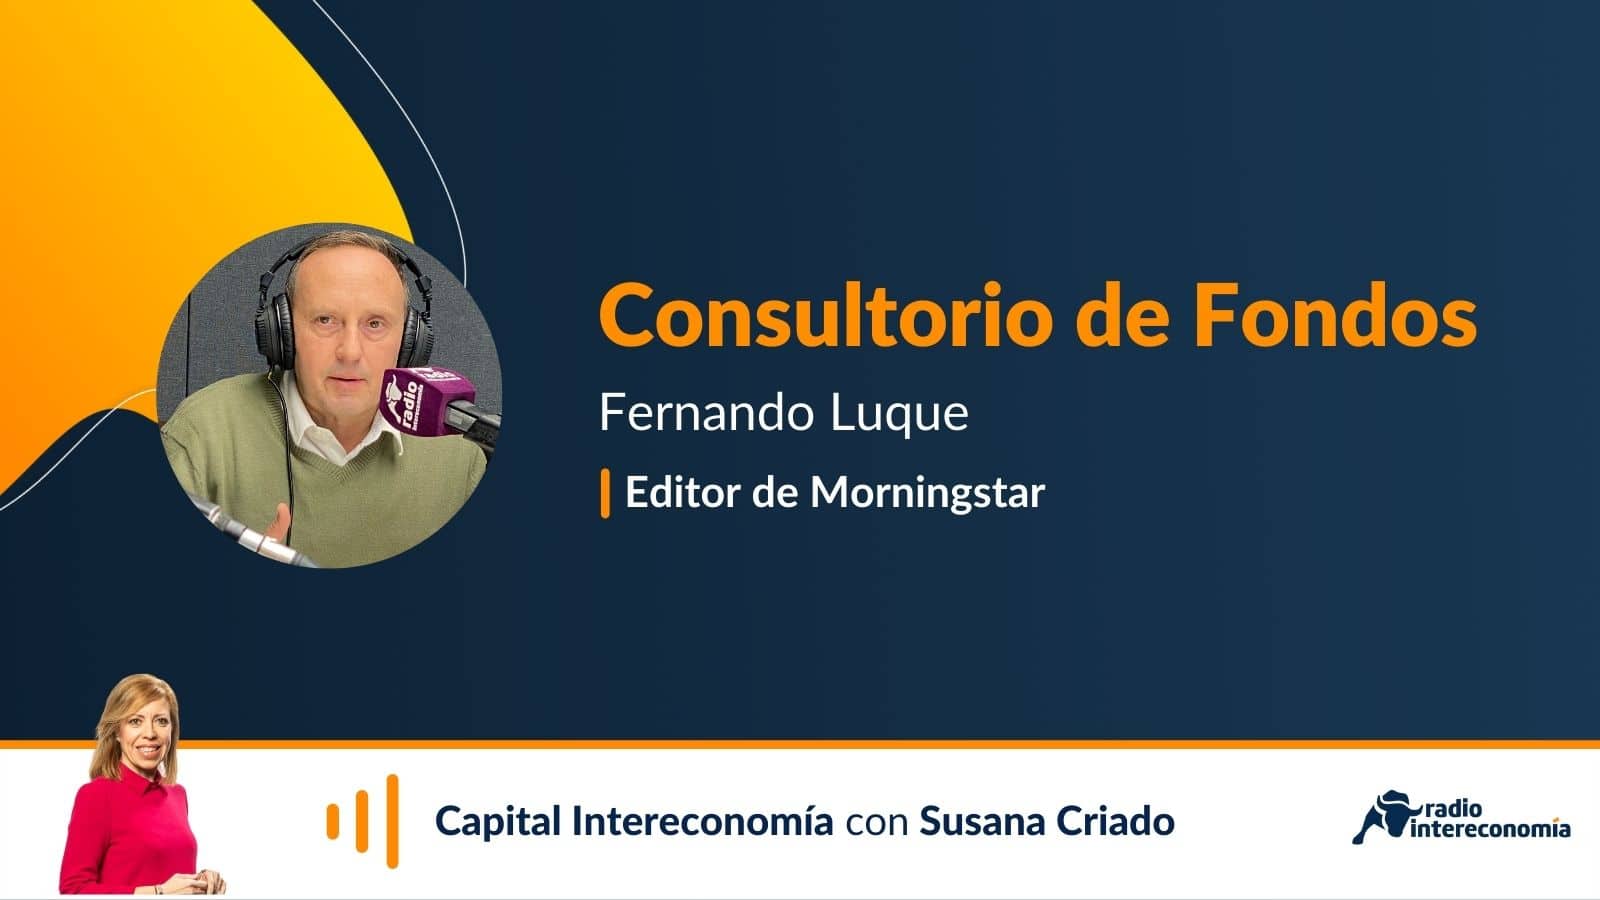 Consultorio de fondos con Fernando Luque (Morningstar) 03/11/2021